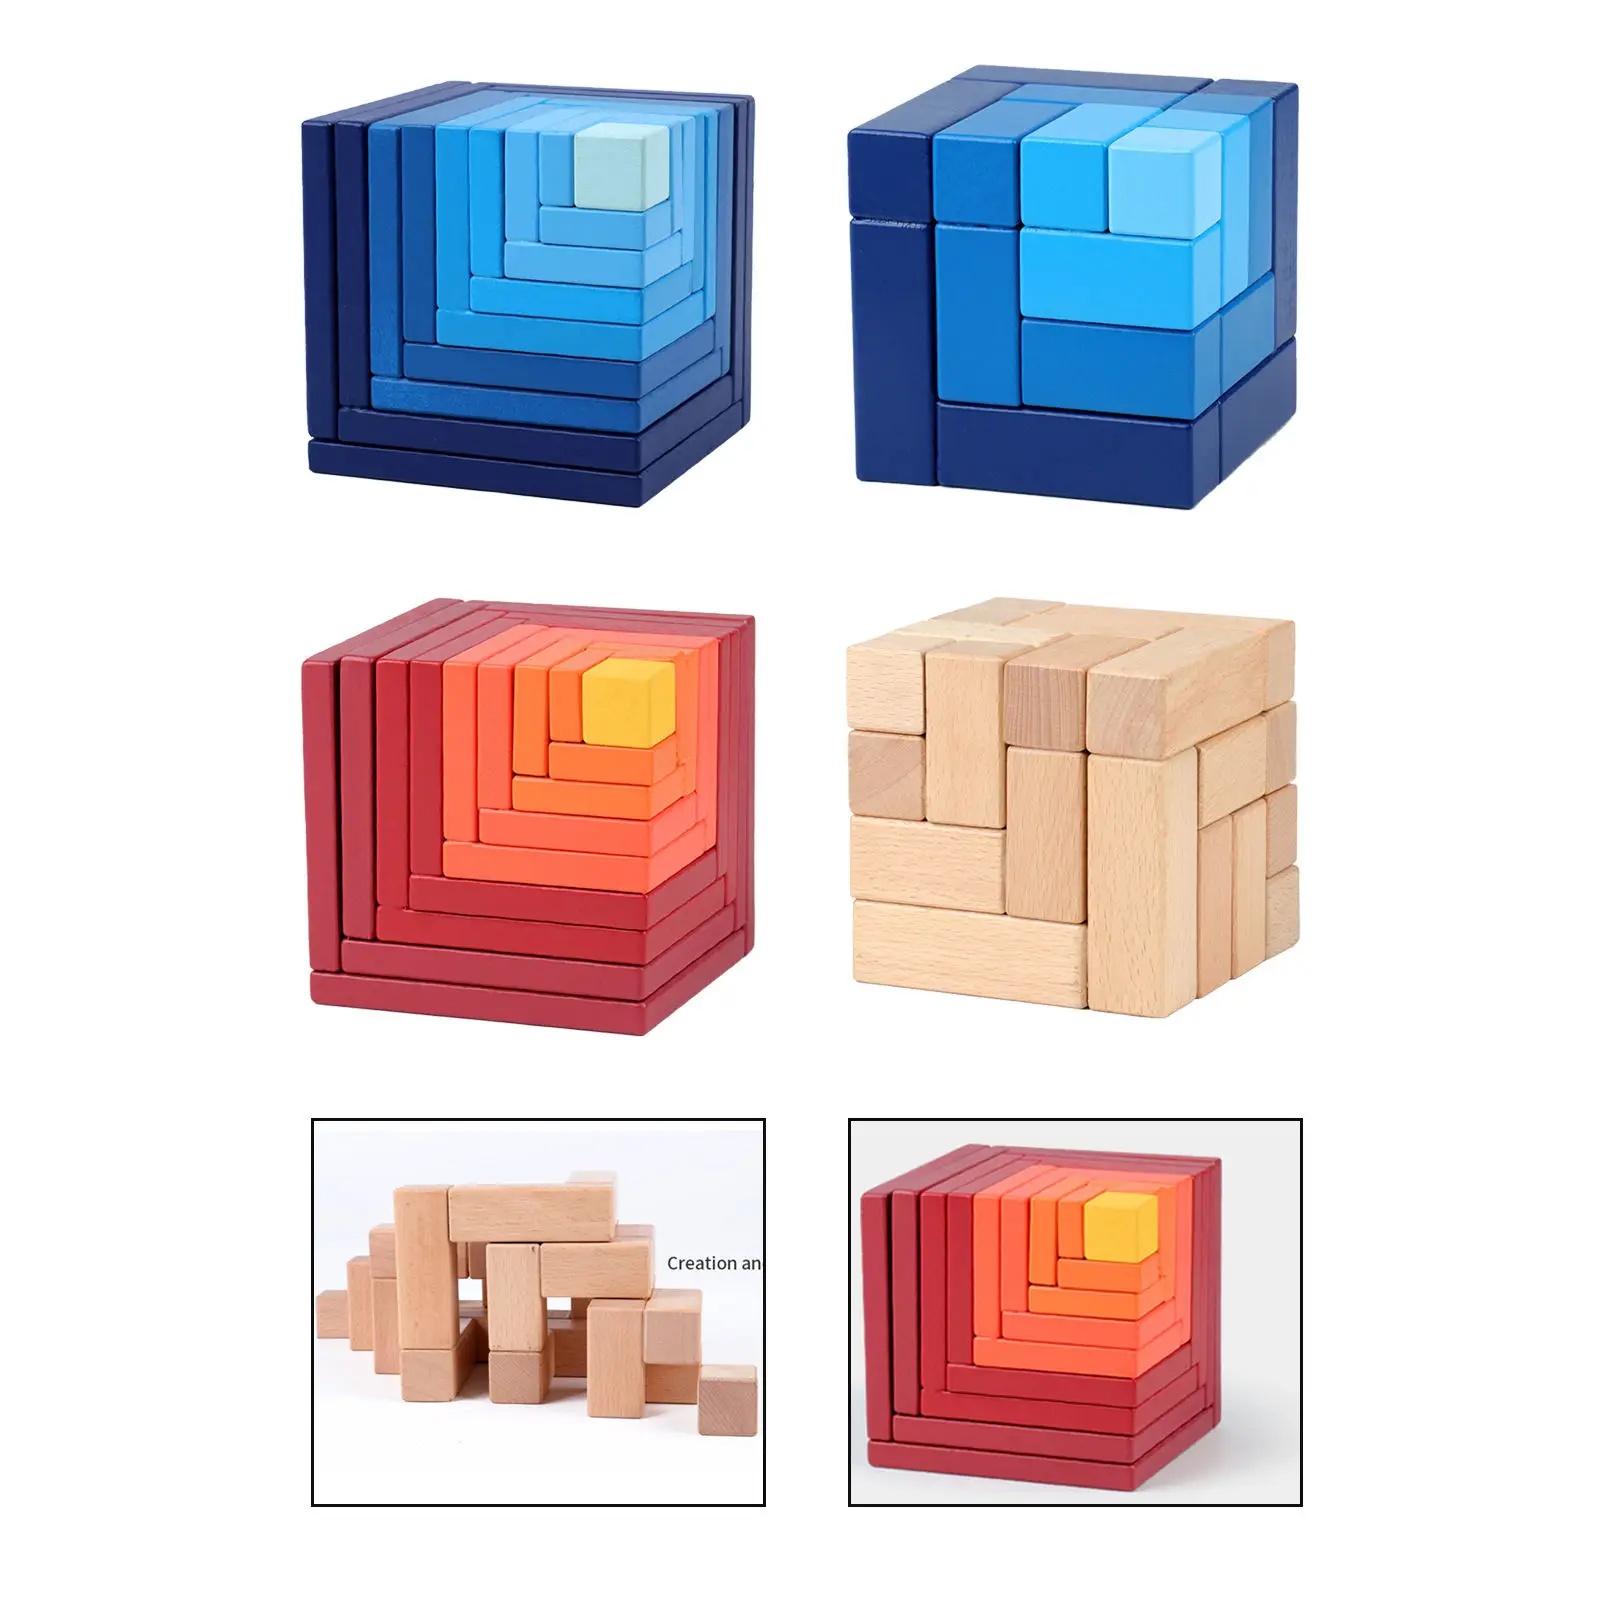 

Wood Puzzle Cube Building Blocks Educational Bricks Montessori Intelligence Developing Brain Teaser Toy